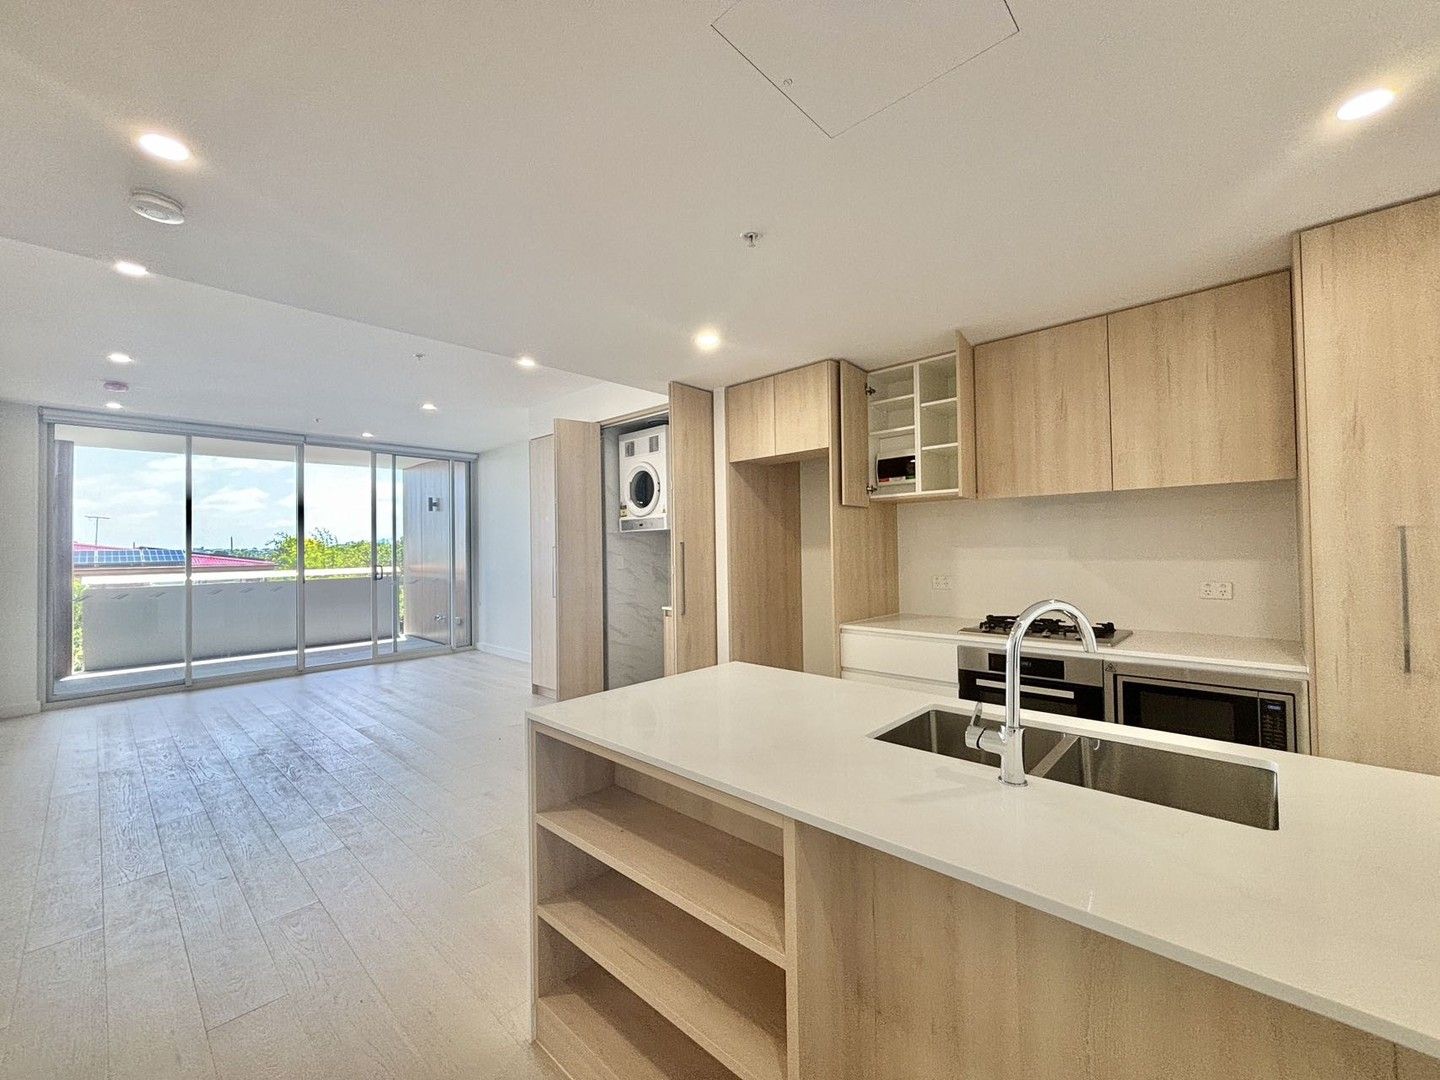 2 bedrooms Apartment / Unit / Flat in D103/222 Flood Street LEICHHARDT NSW, 2040